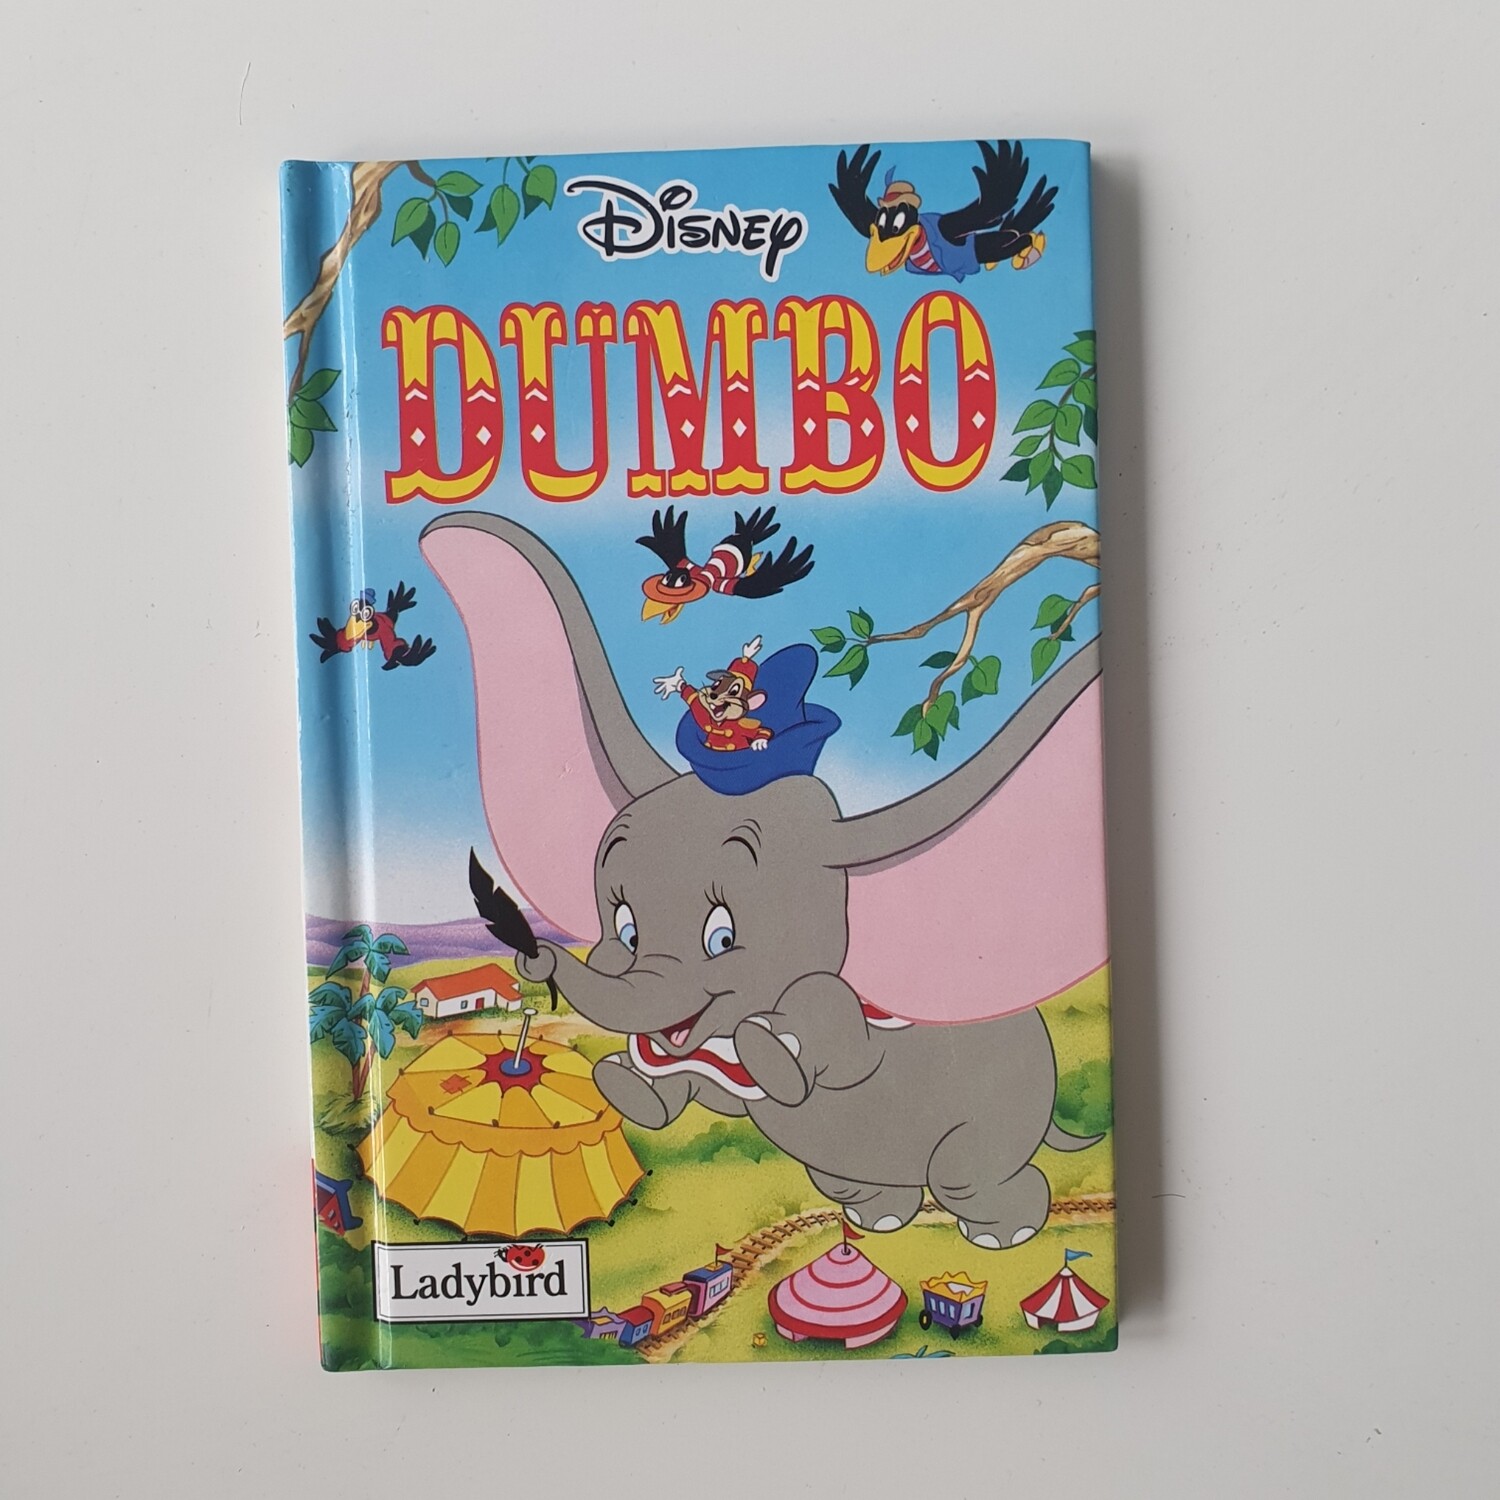 Dumbo Notebook